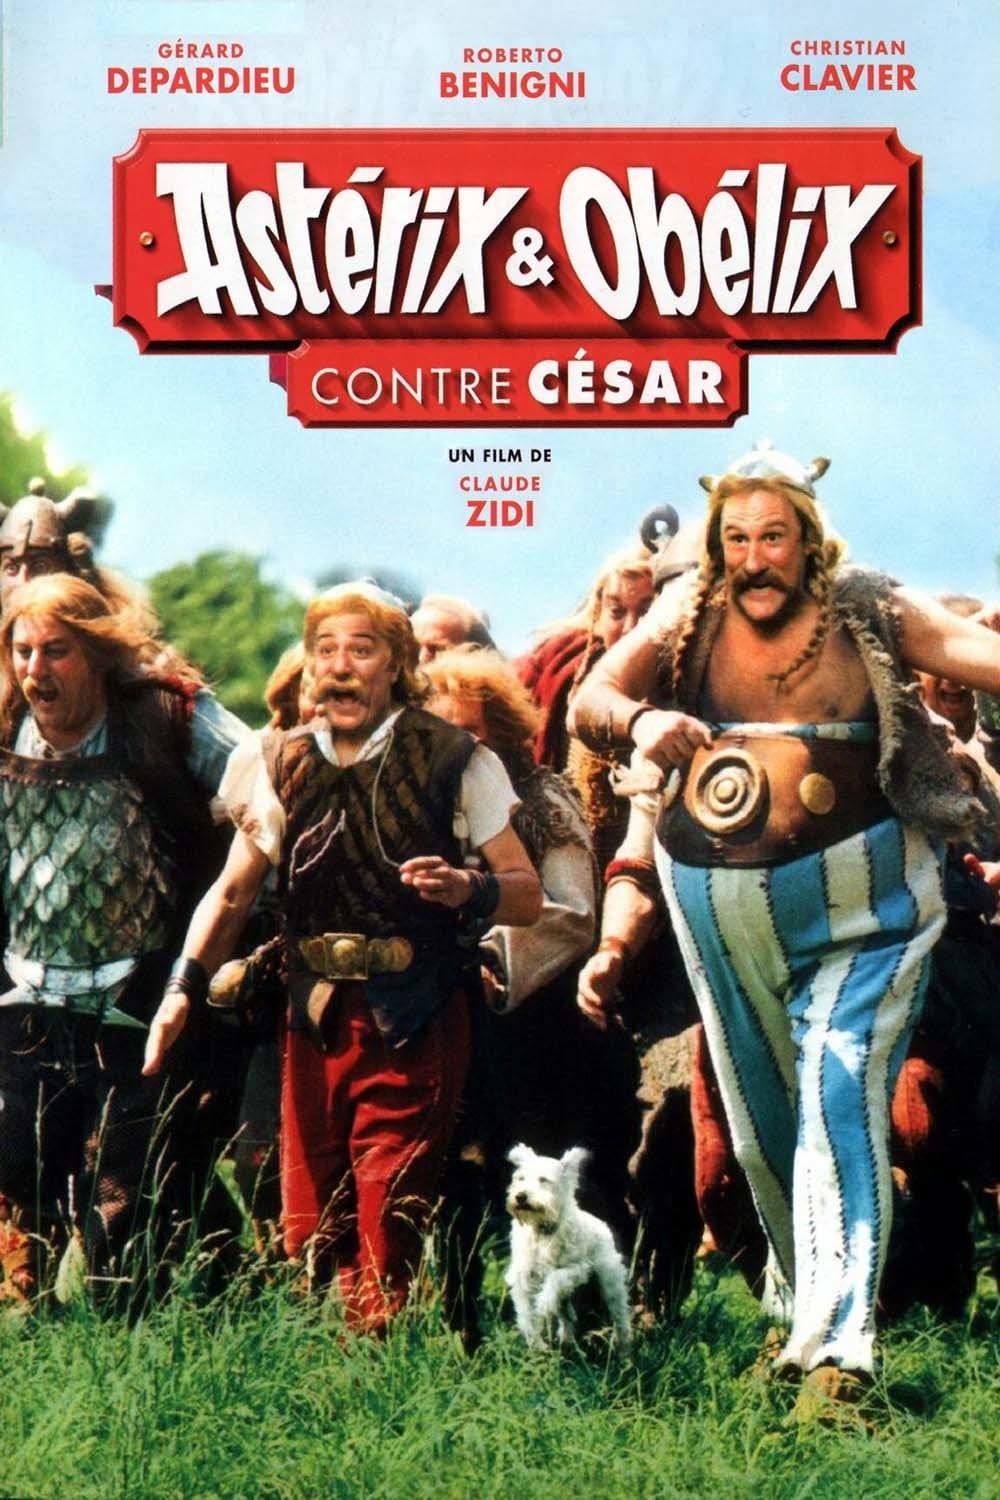 Asterix & Obelix Take on Caesar.